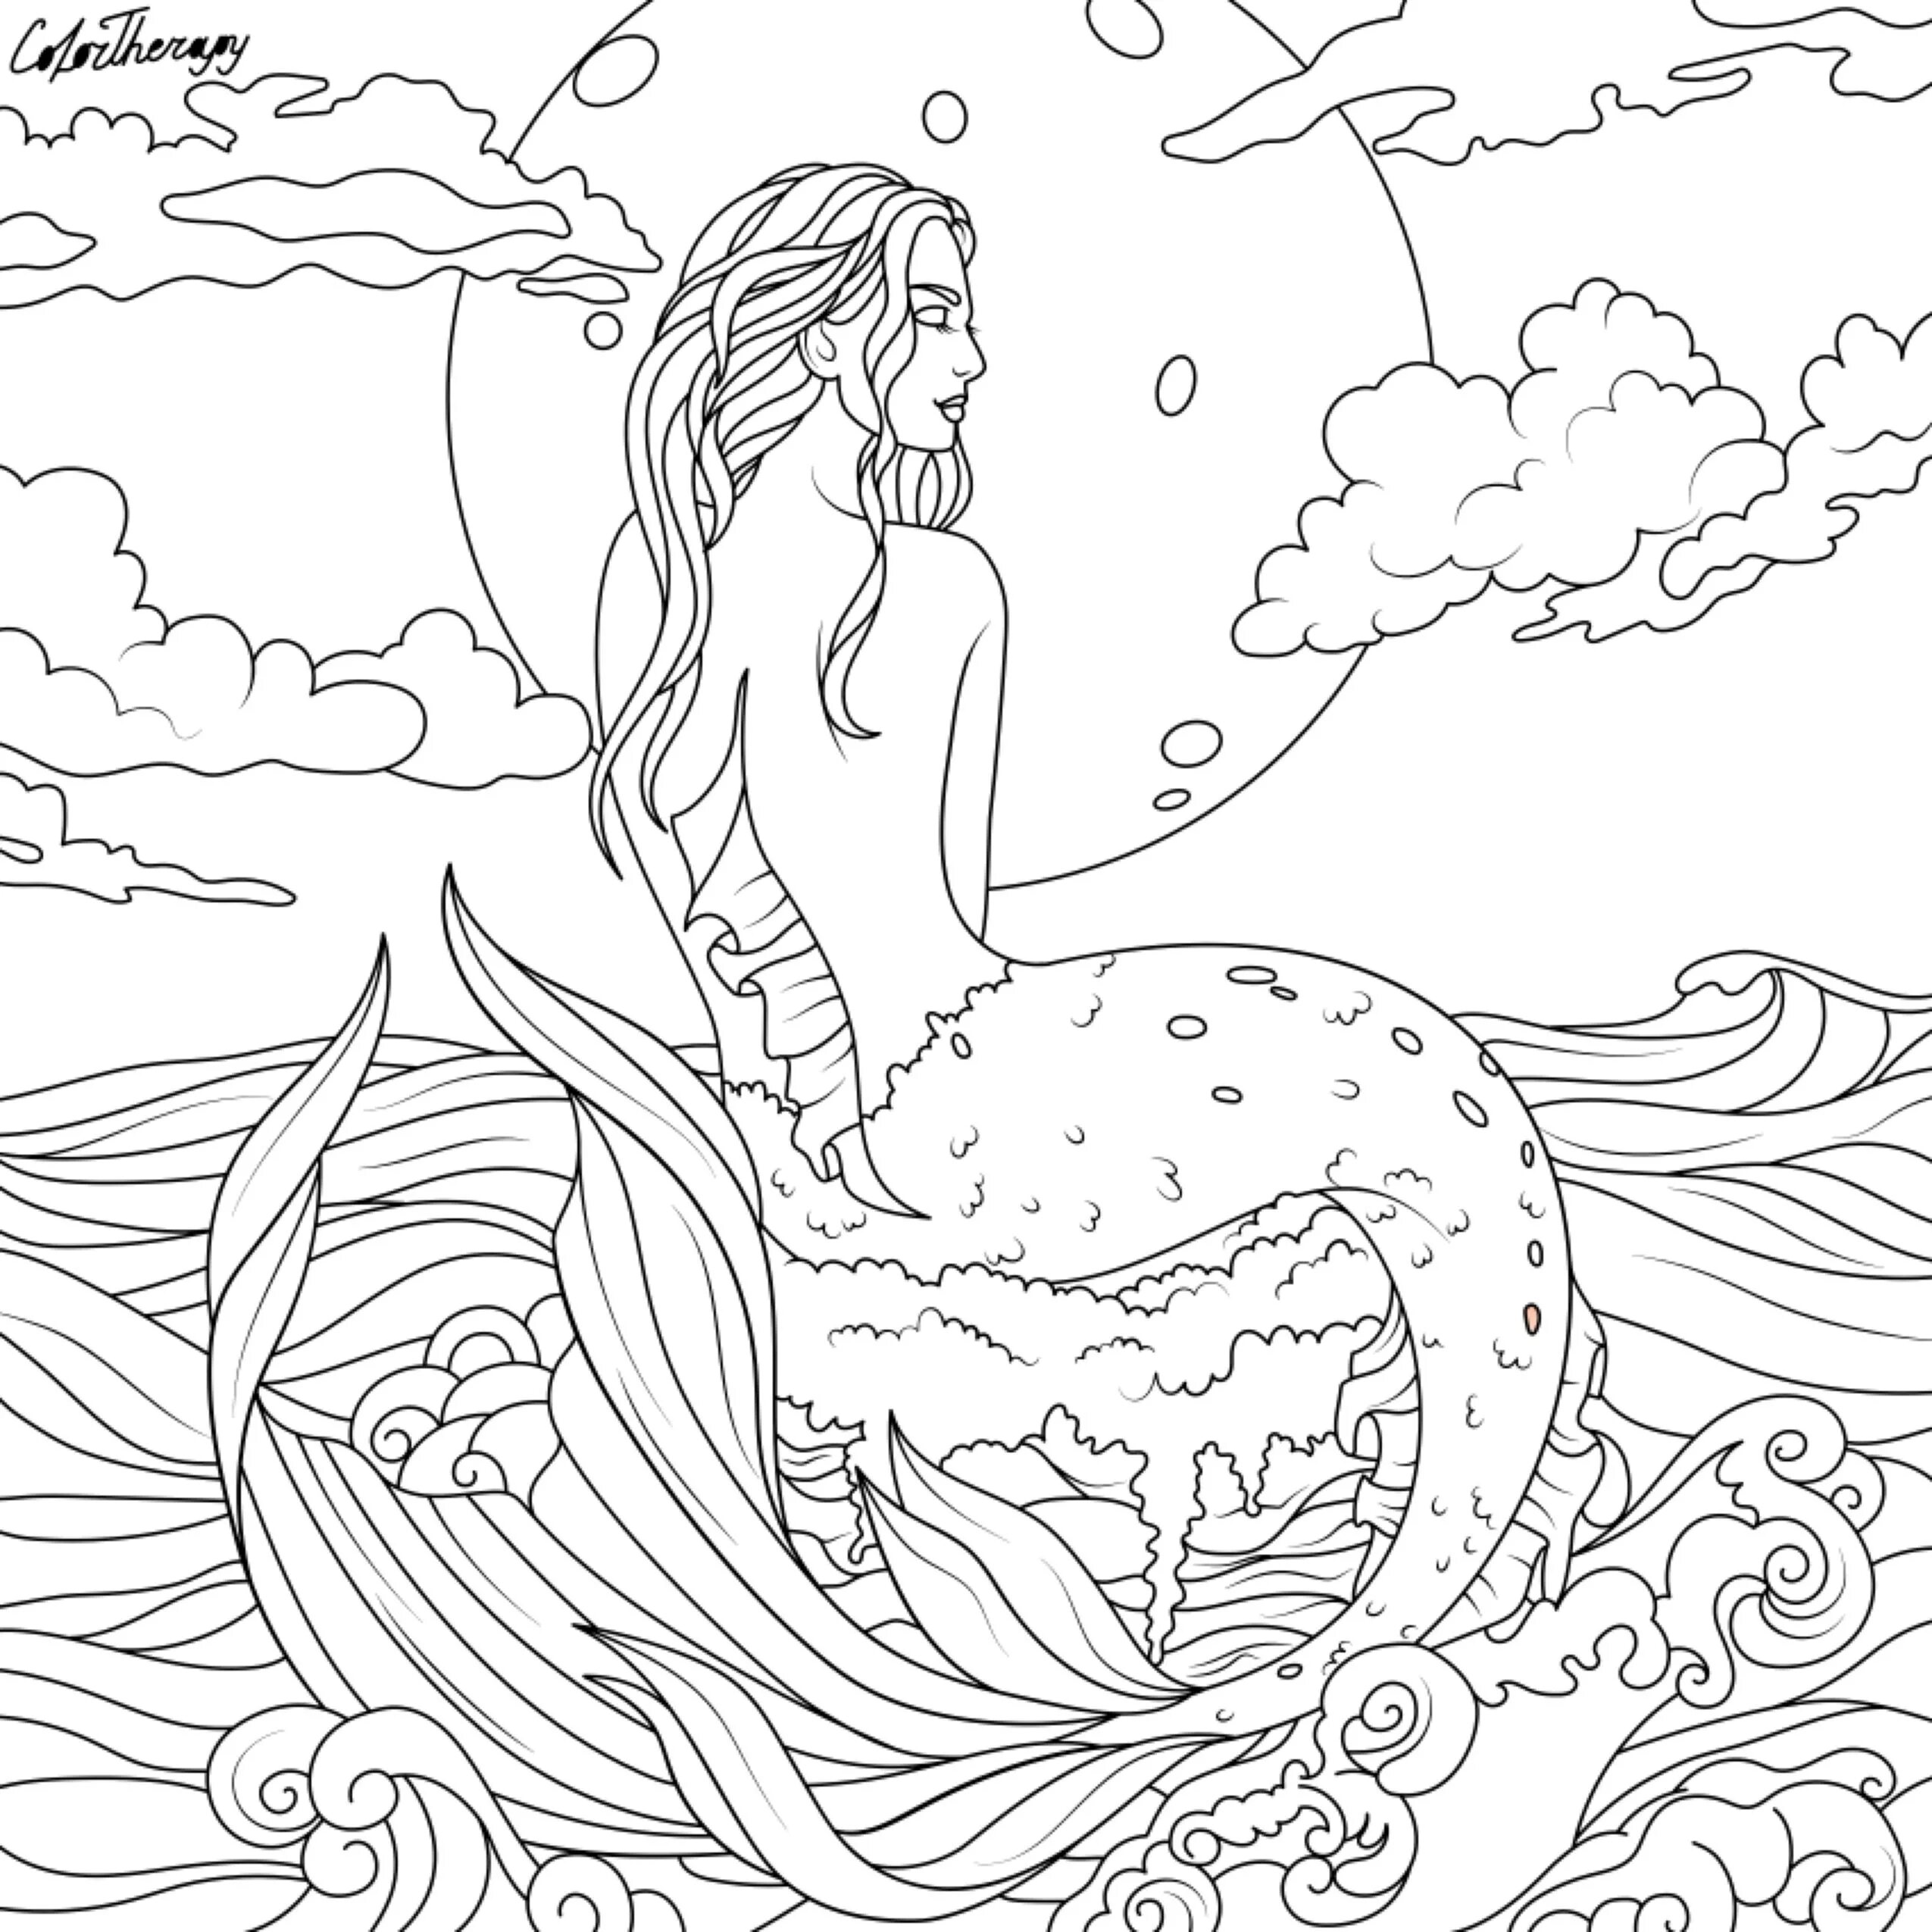 Complex mermaid #9